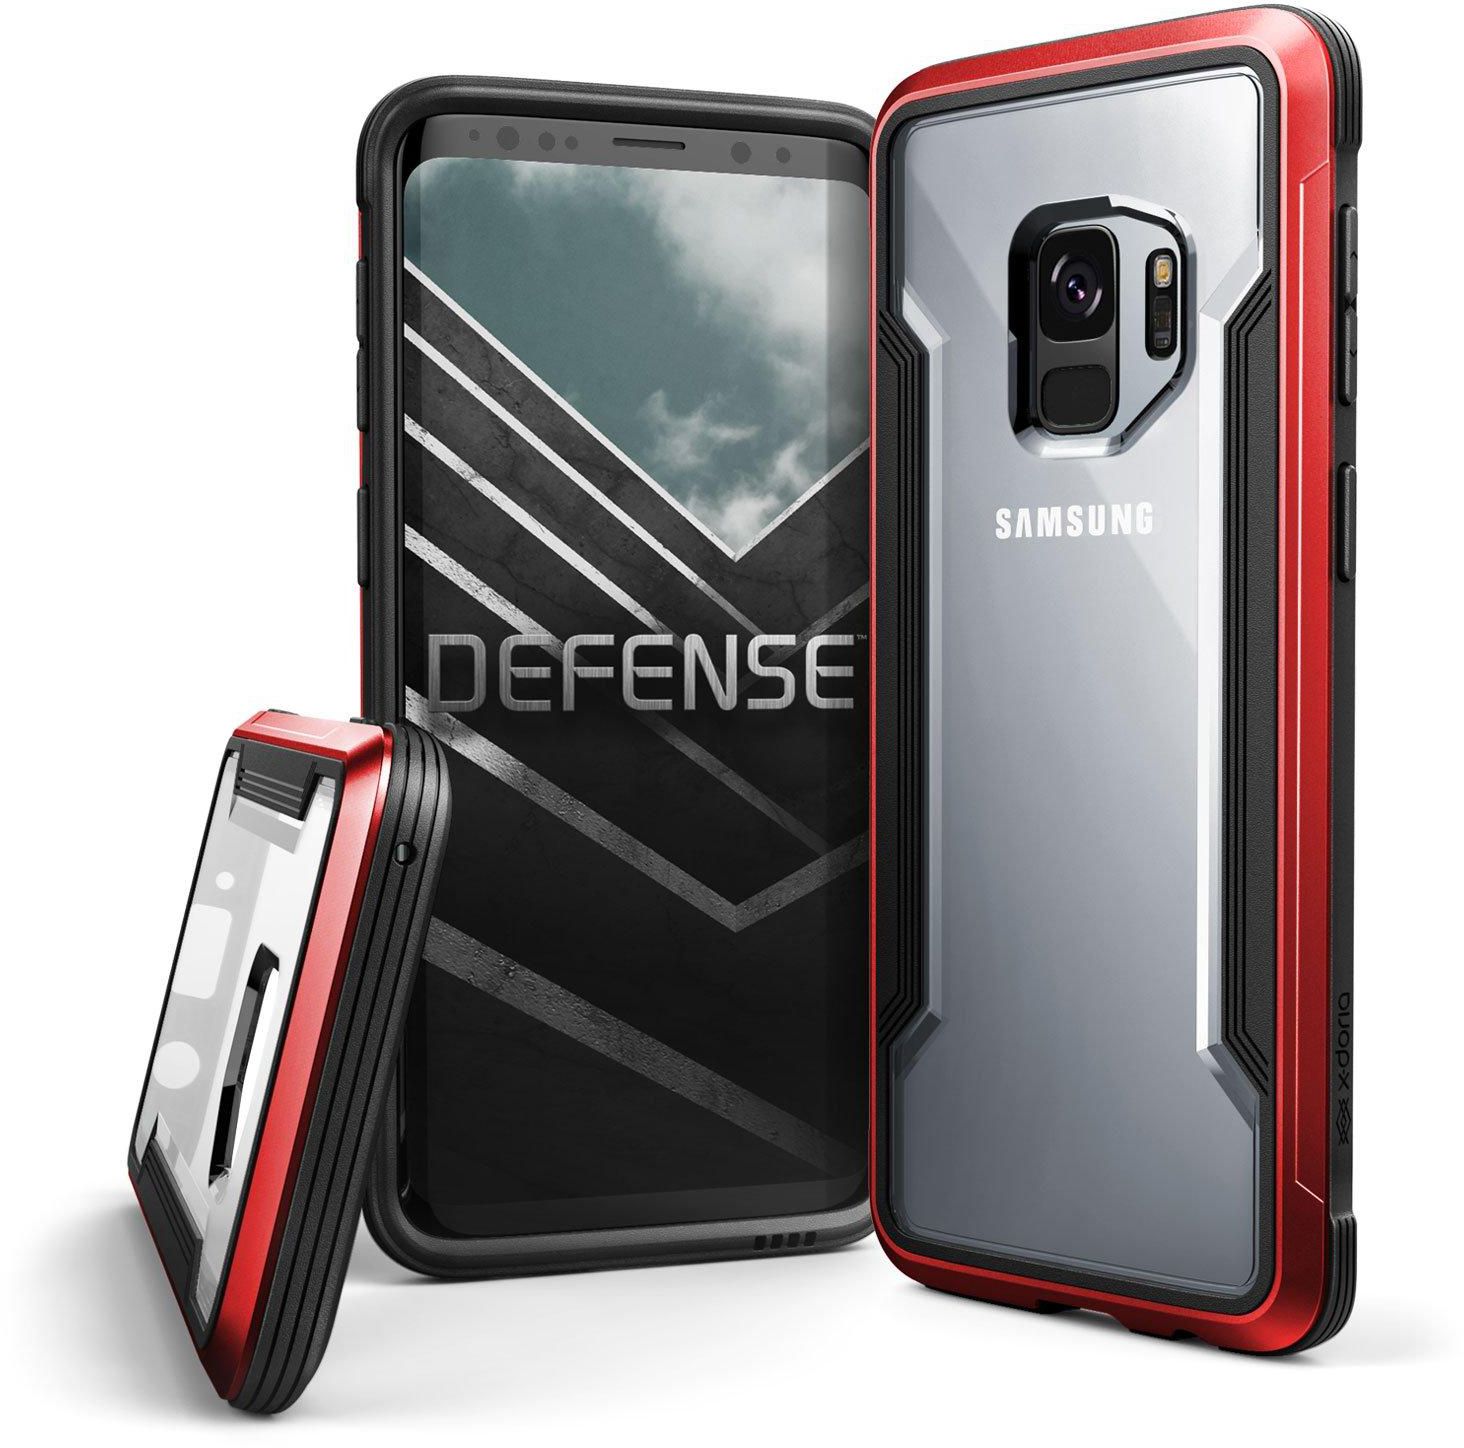 Original X-Doria Defense Shield Protective Case for Samsung S9 (Red)